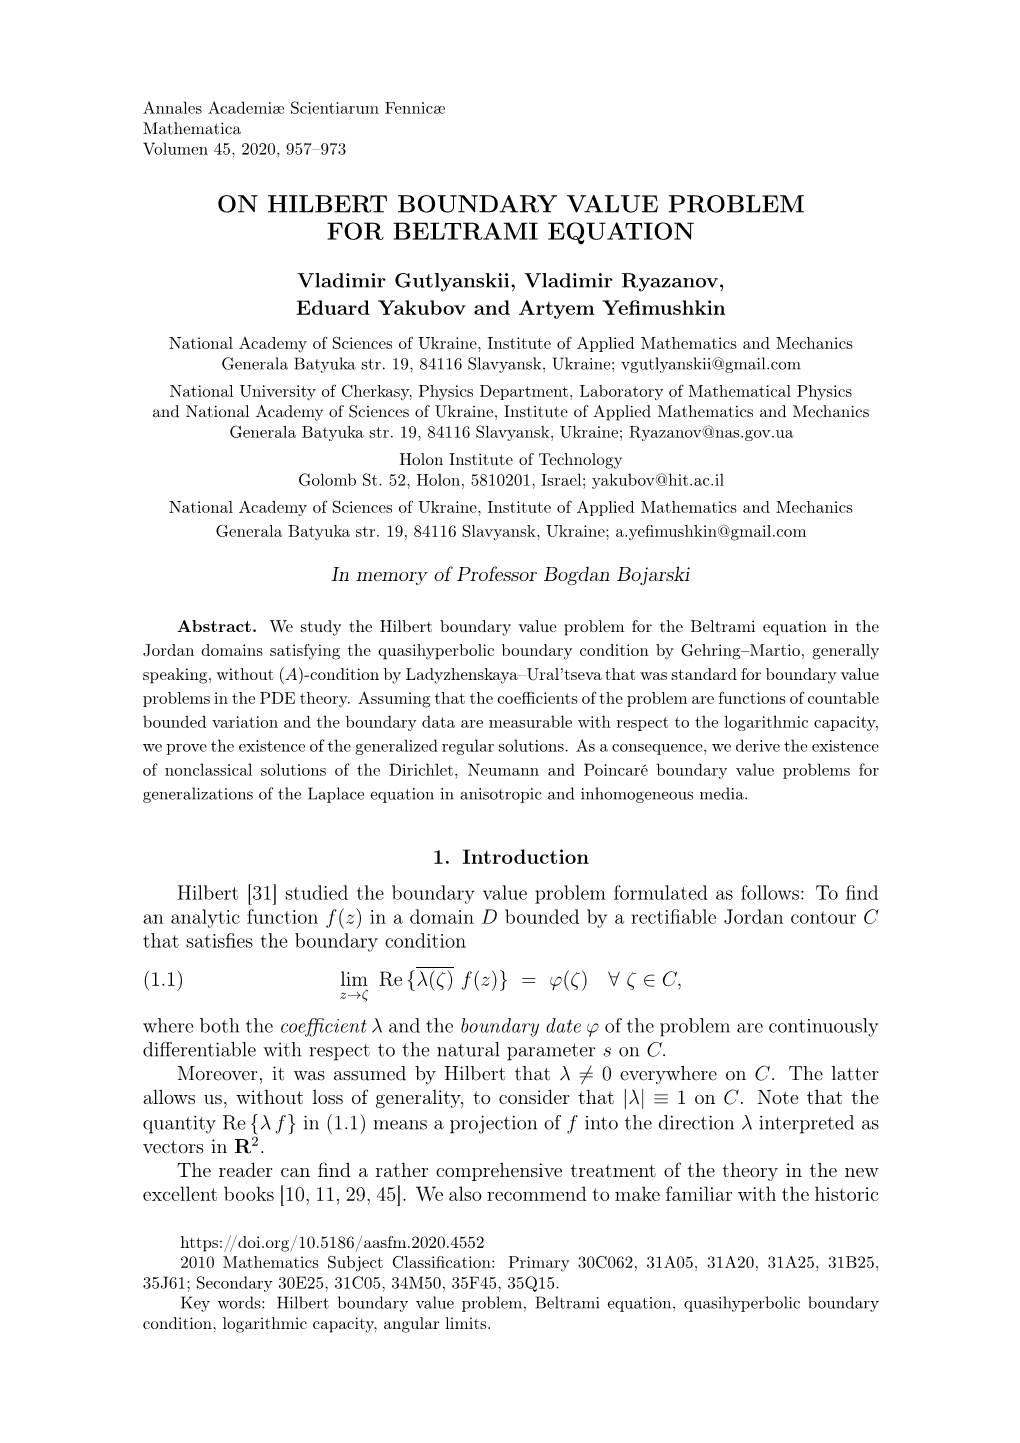 On Hilbert Boundary Value Problem for Beltrami Equation